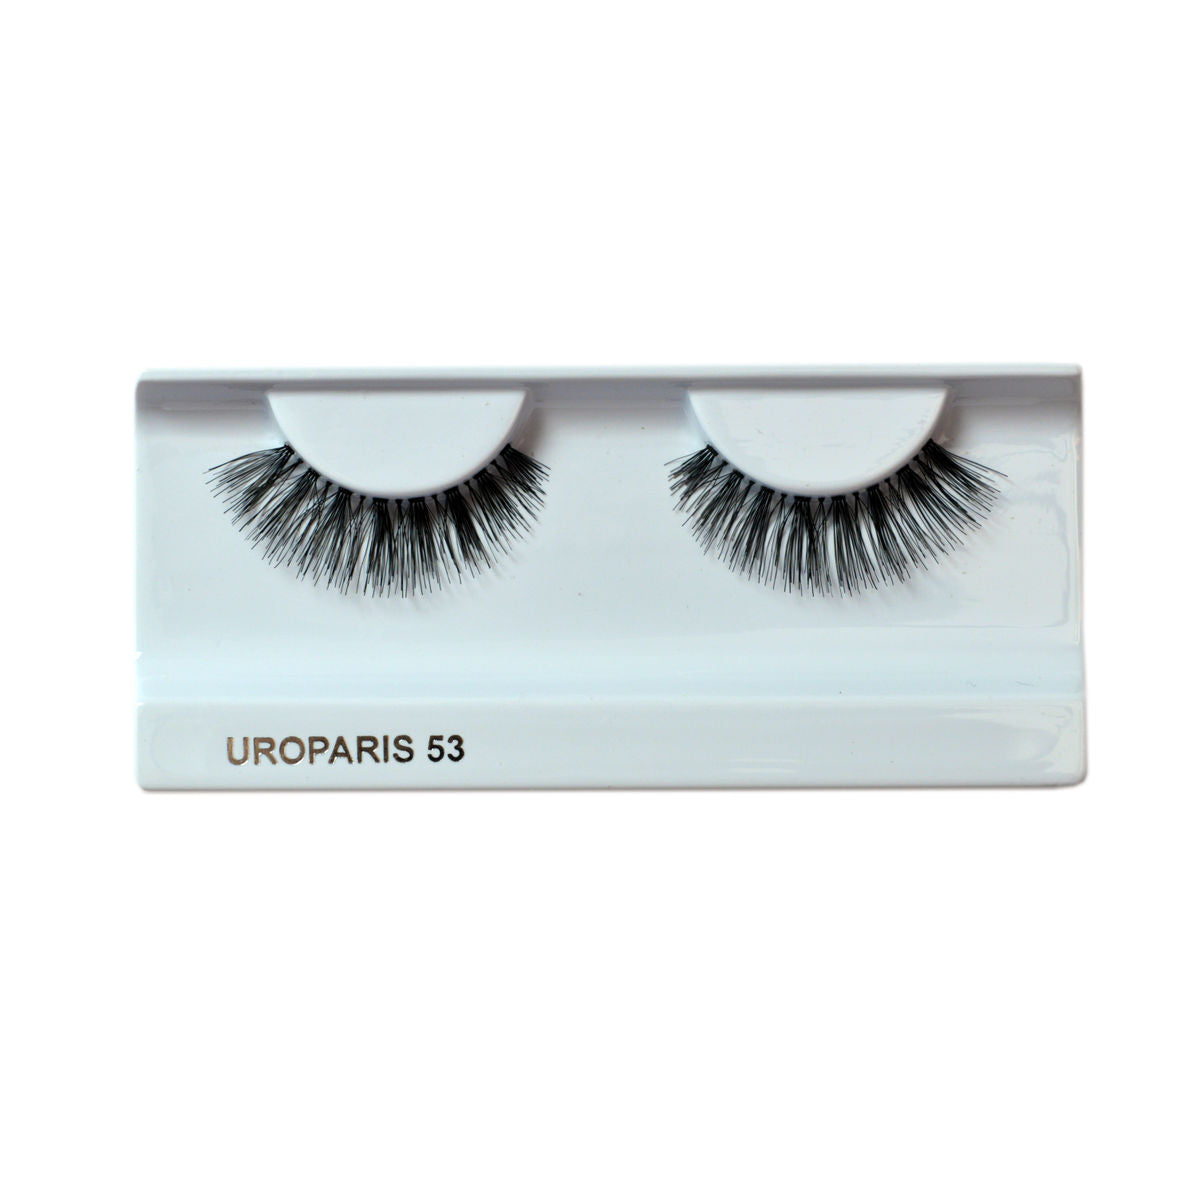 Uroparis Eyelashes 53 Black (1 pair) Uroparis